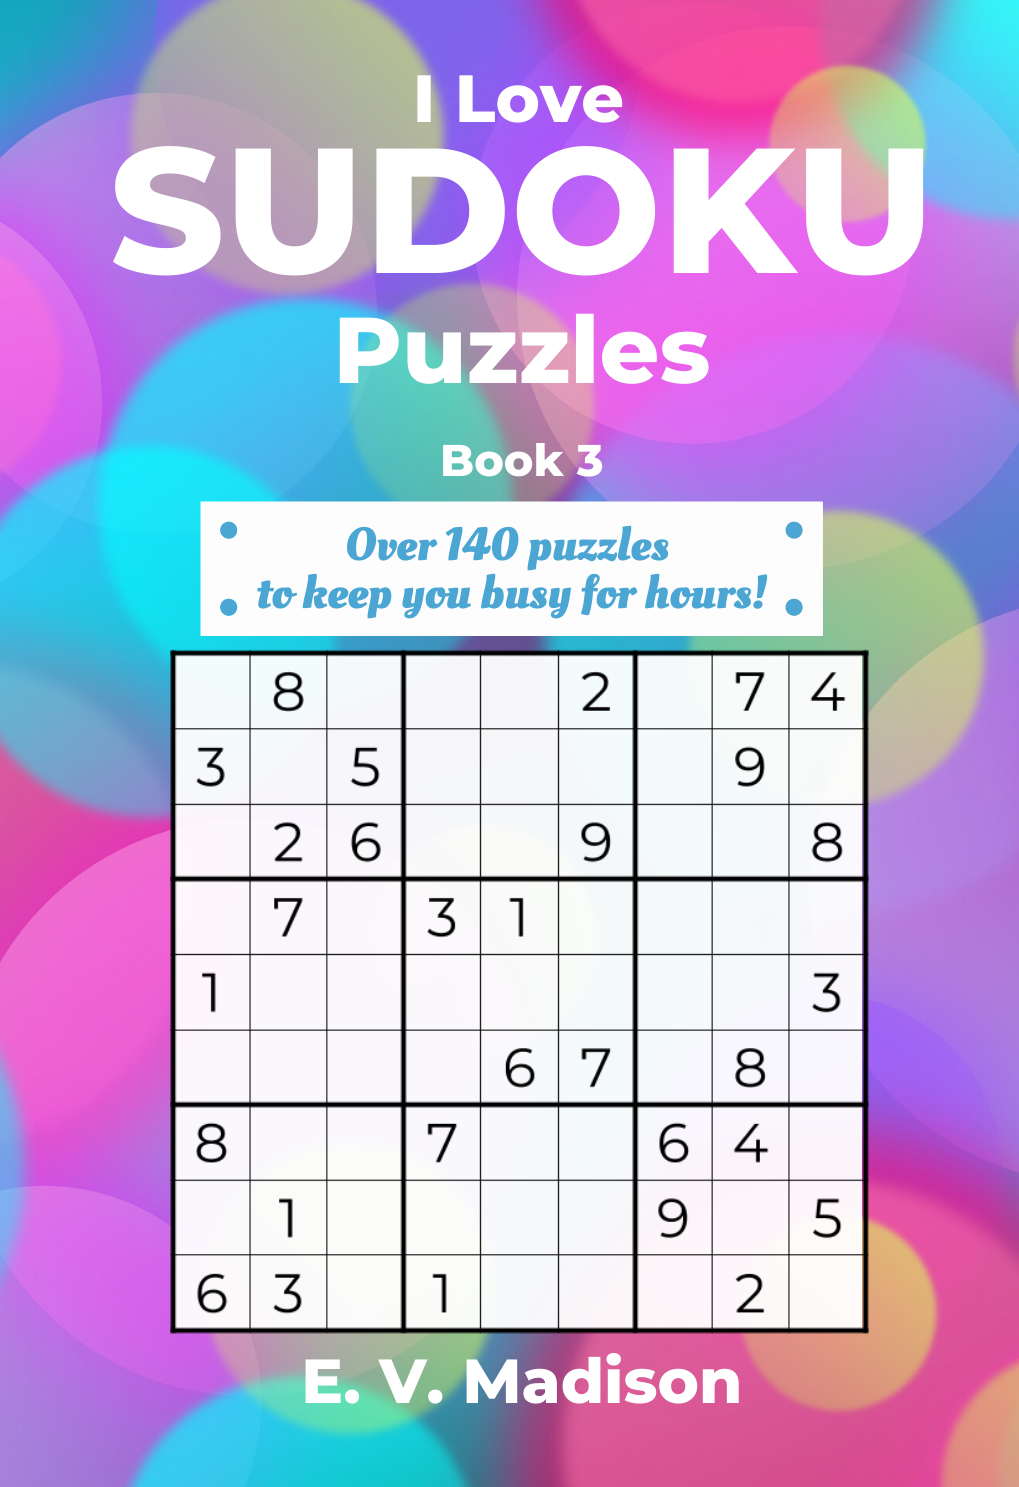 I Love Sudoku Puzzles - Book 3